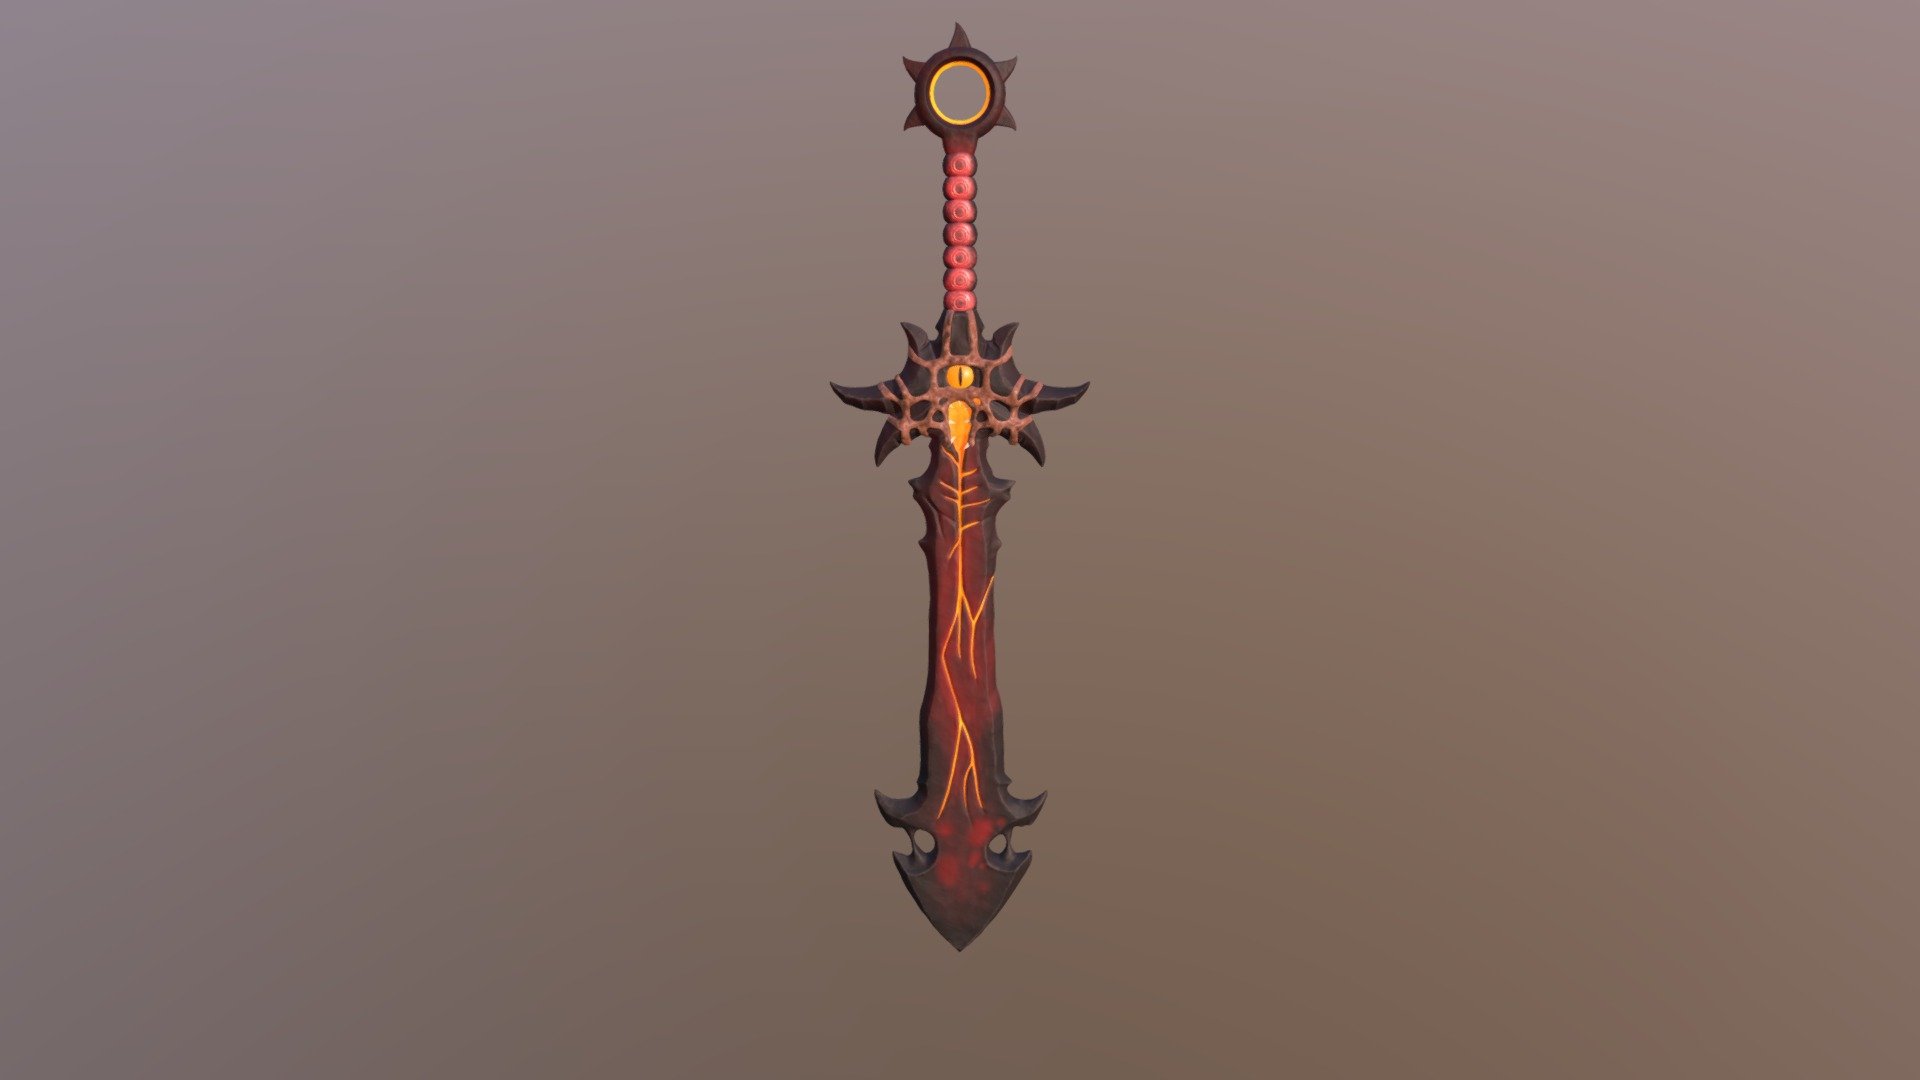 Lava Sword